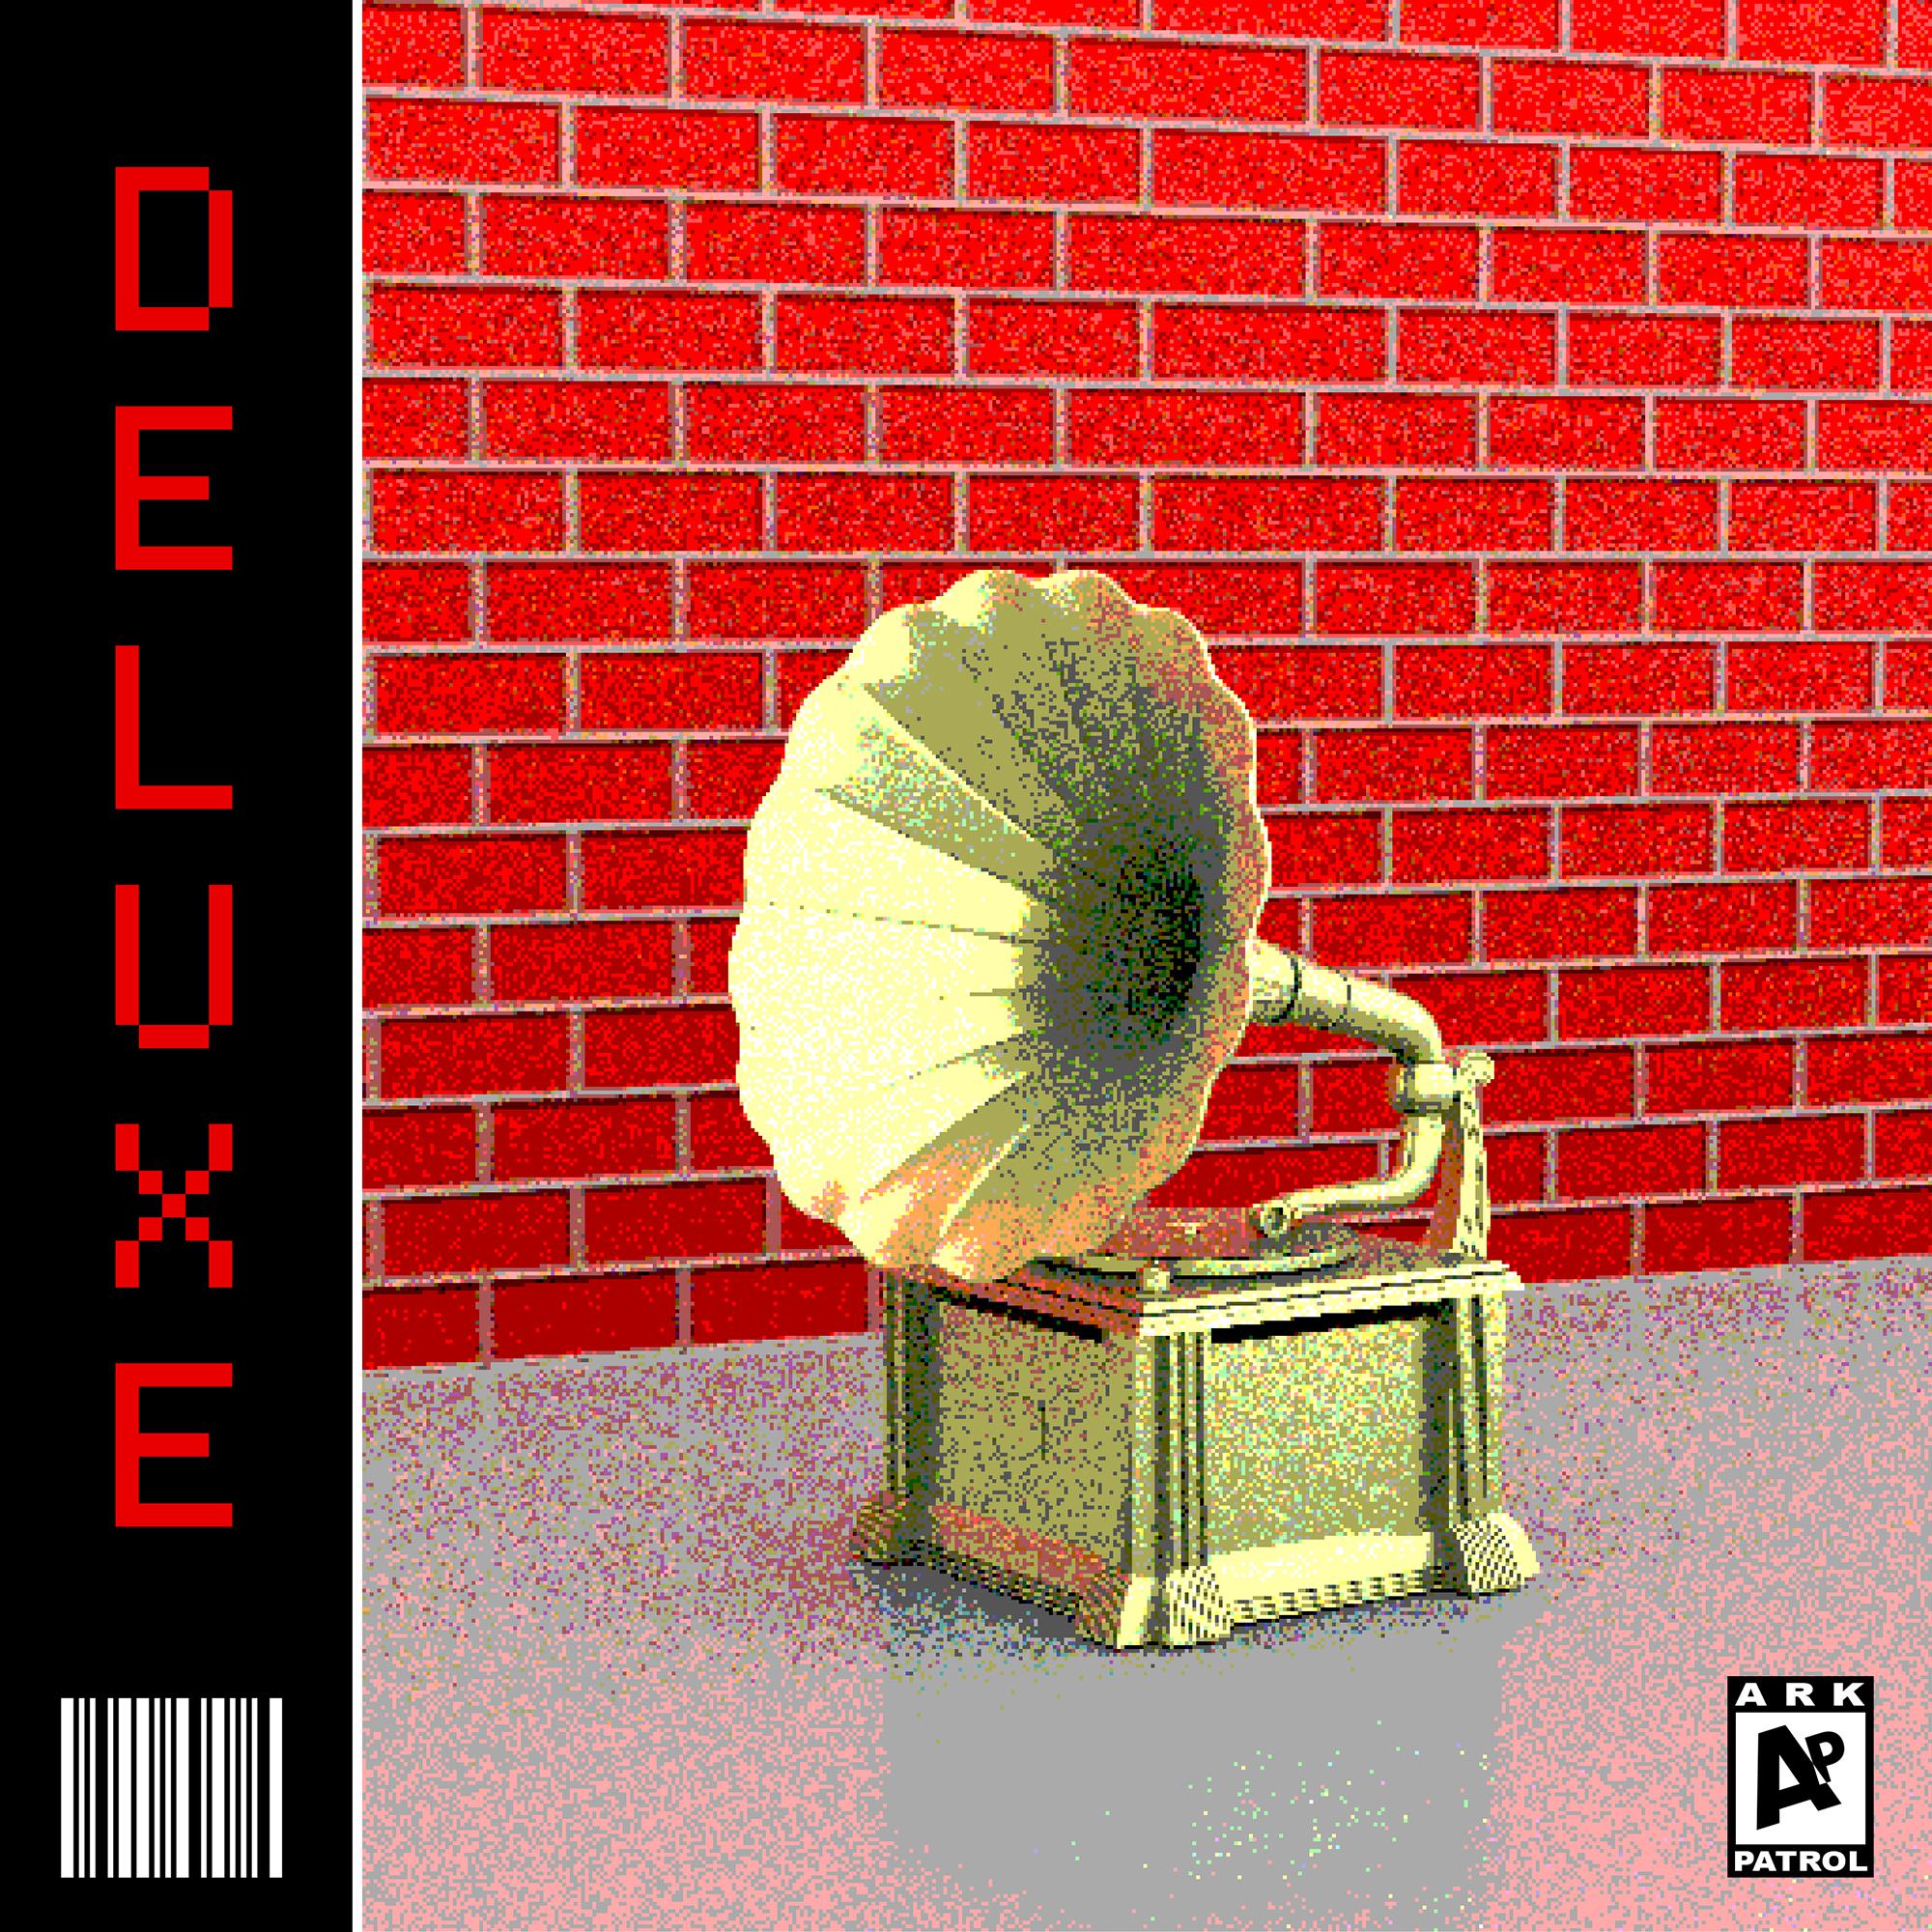 Deluxe EP